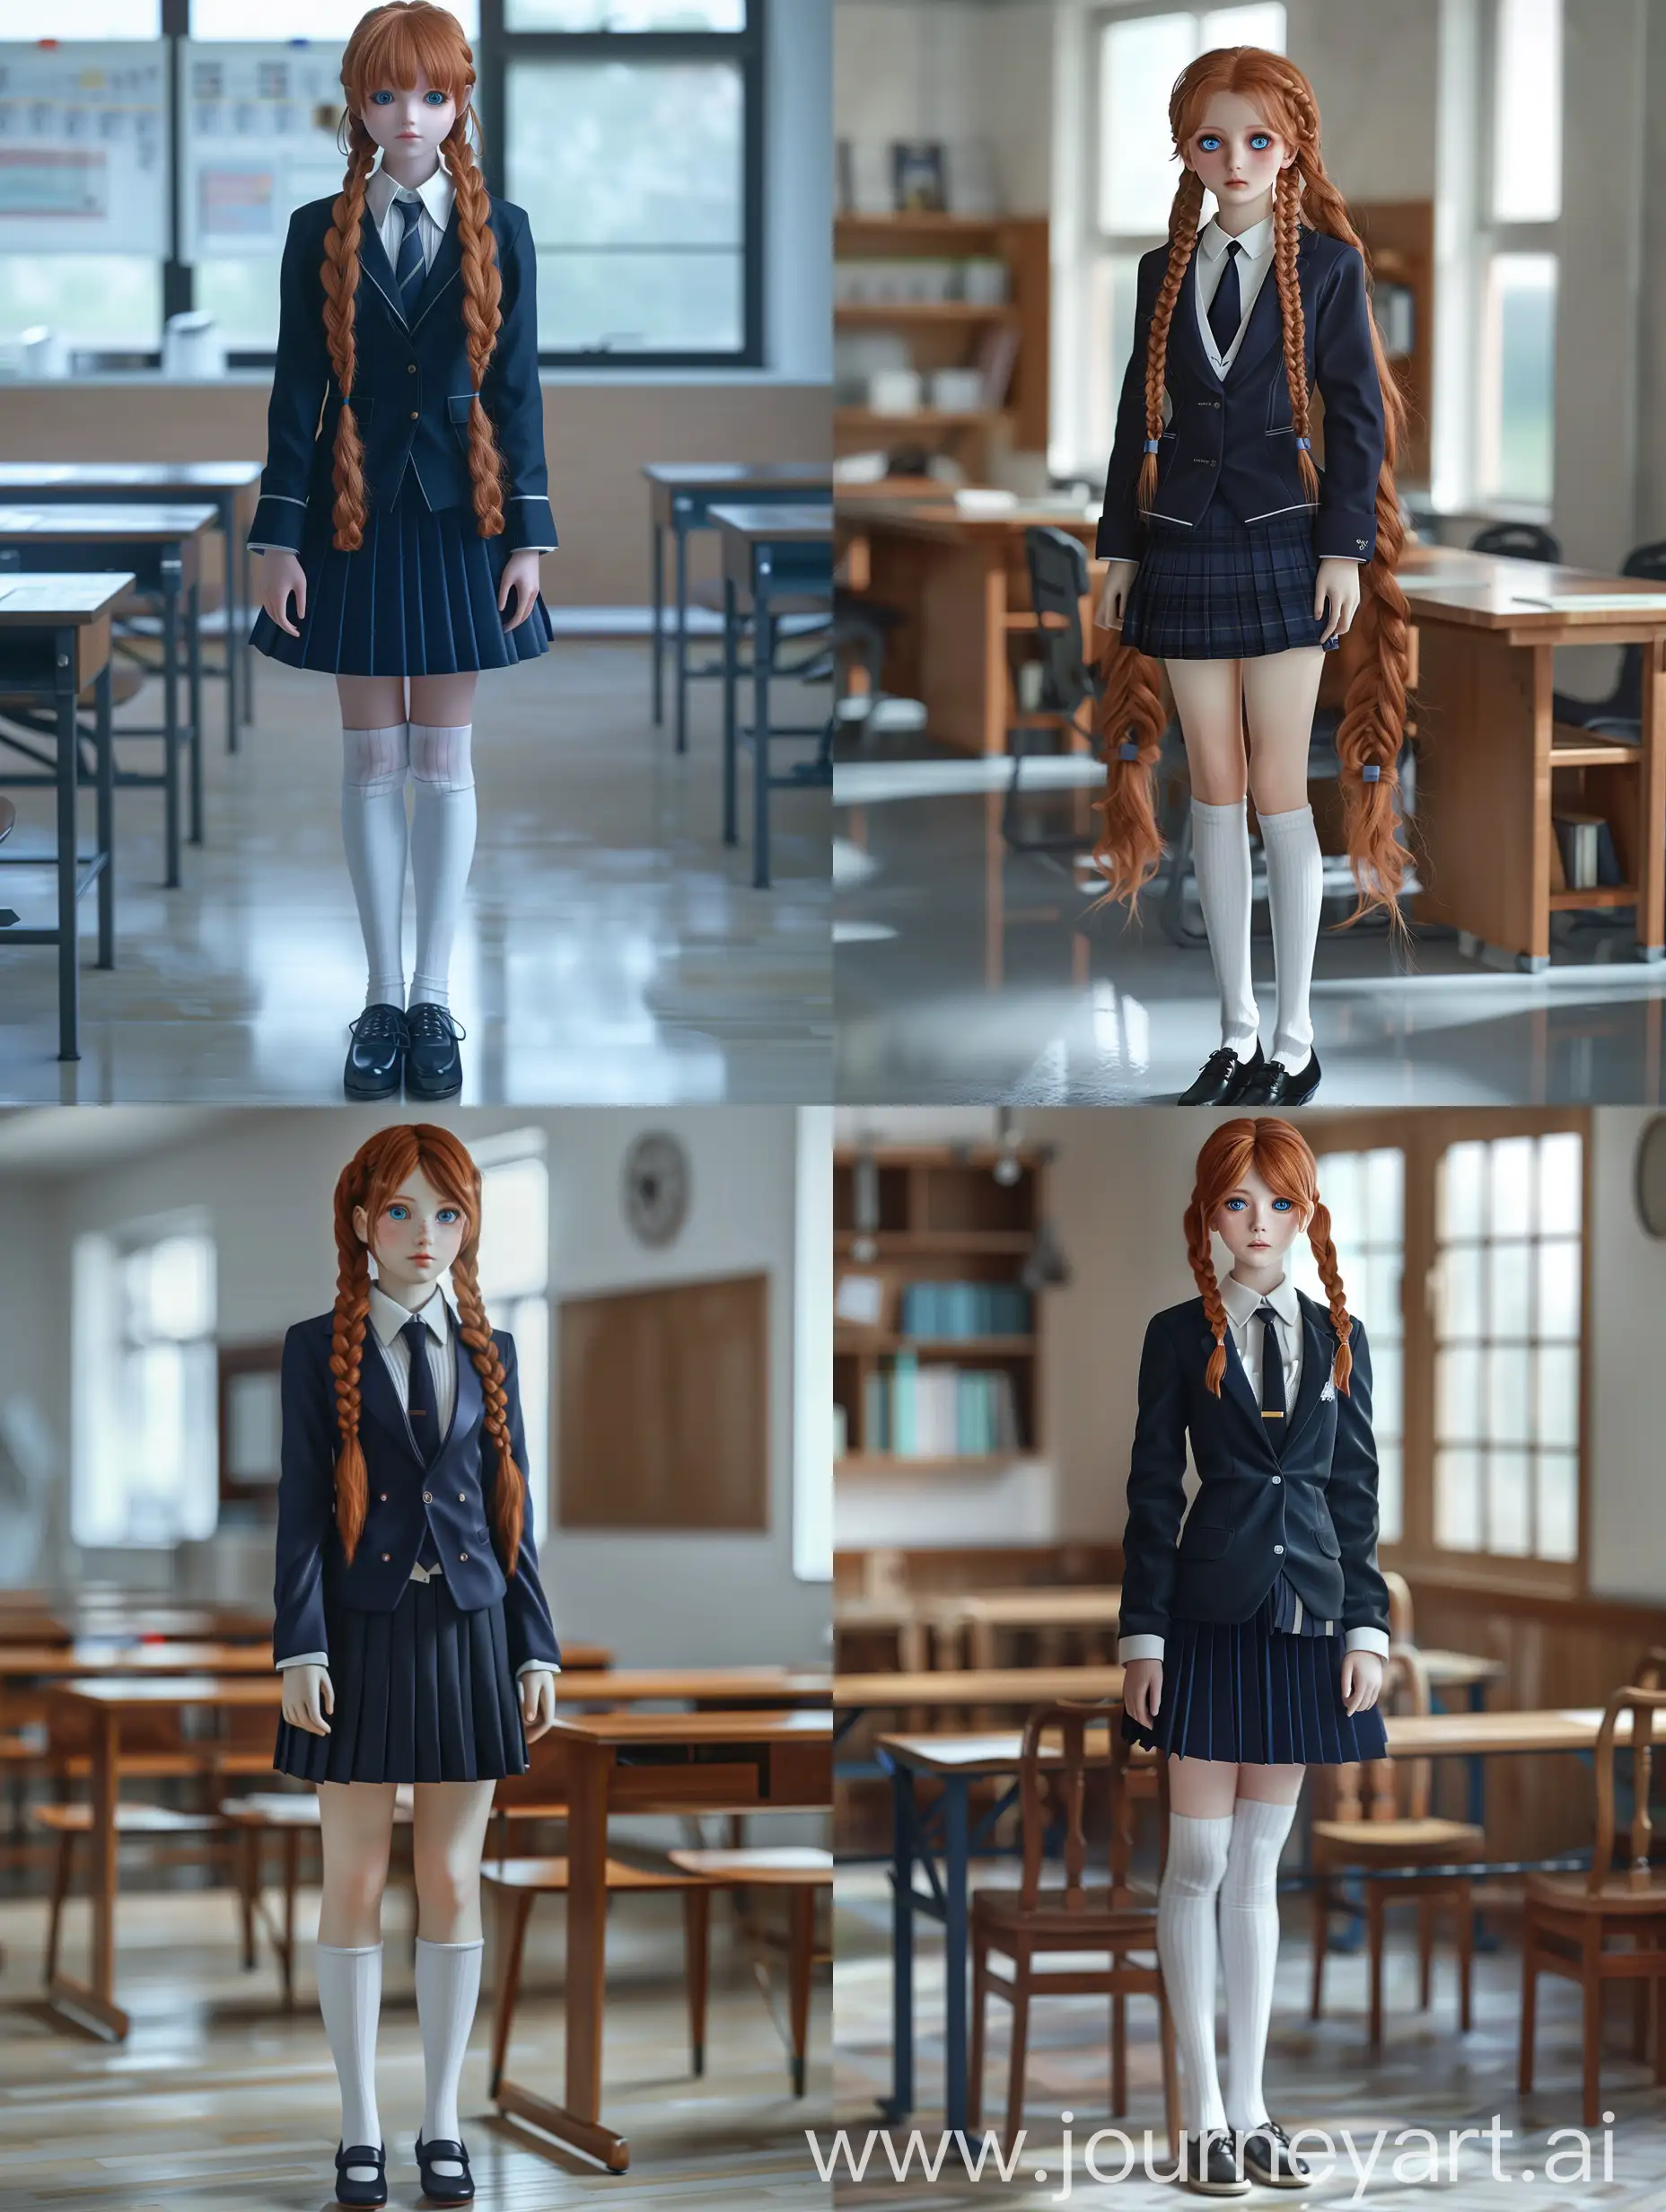 Adorable-Schoolgirl-with-Auburn-Braided-Hair-in-Navy-Uniform-Standing-in-Classroom